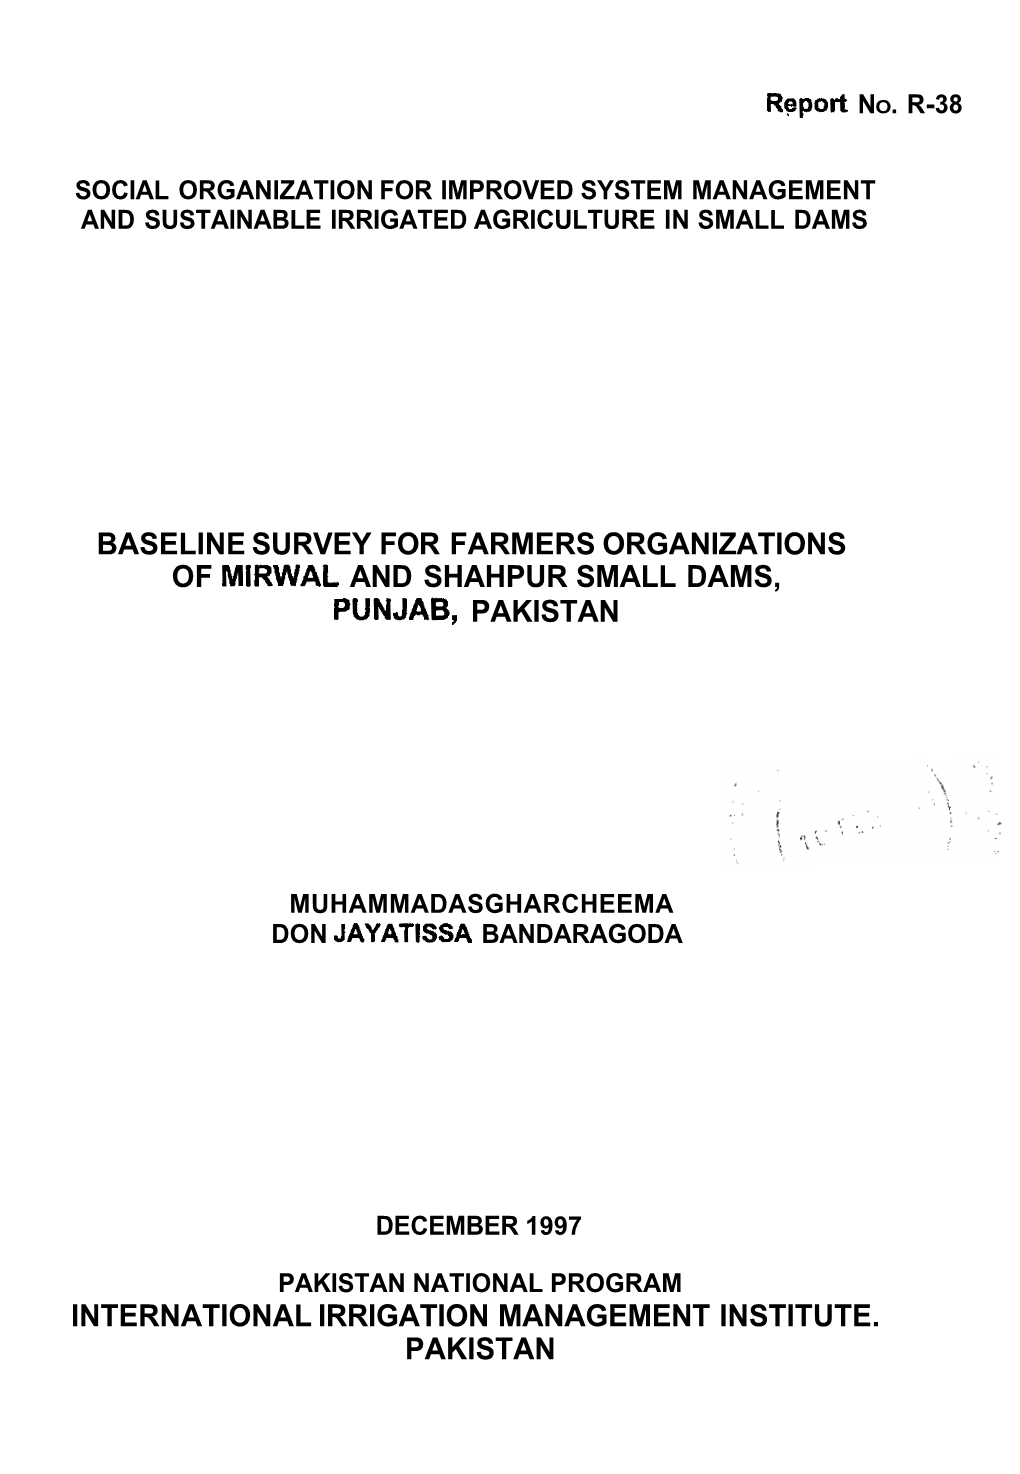 Baseline Survey for Farmers Organizations of Mirwal and Shahpur Small Dams, Punjab, Pakistan